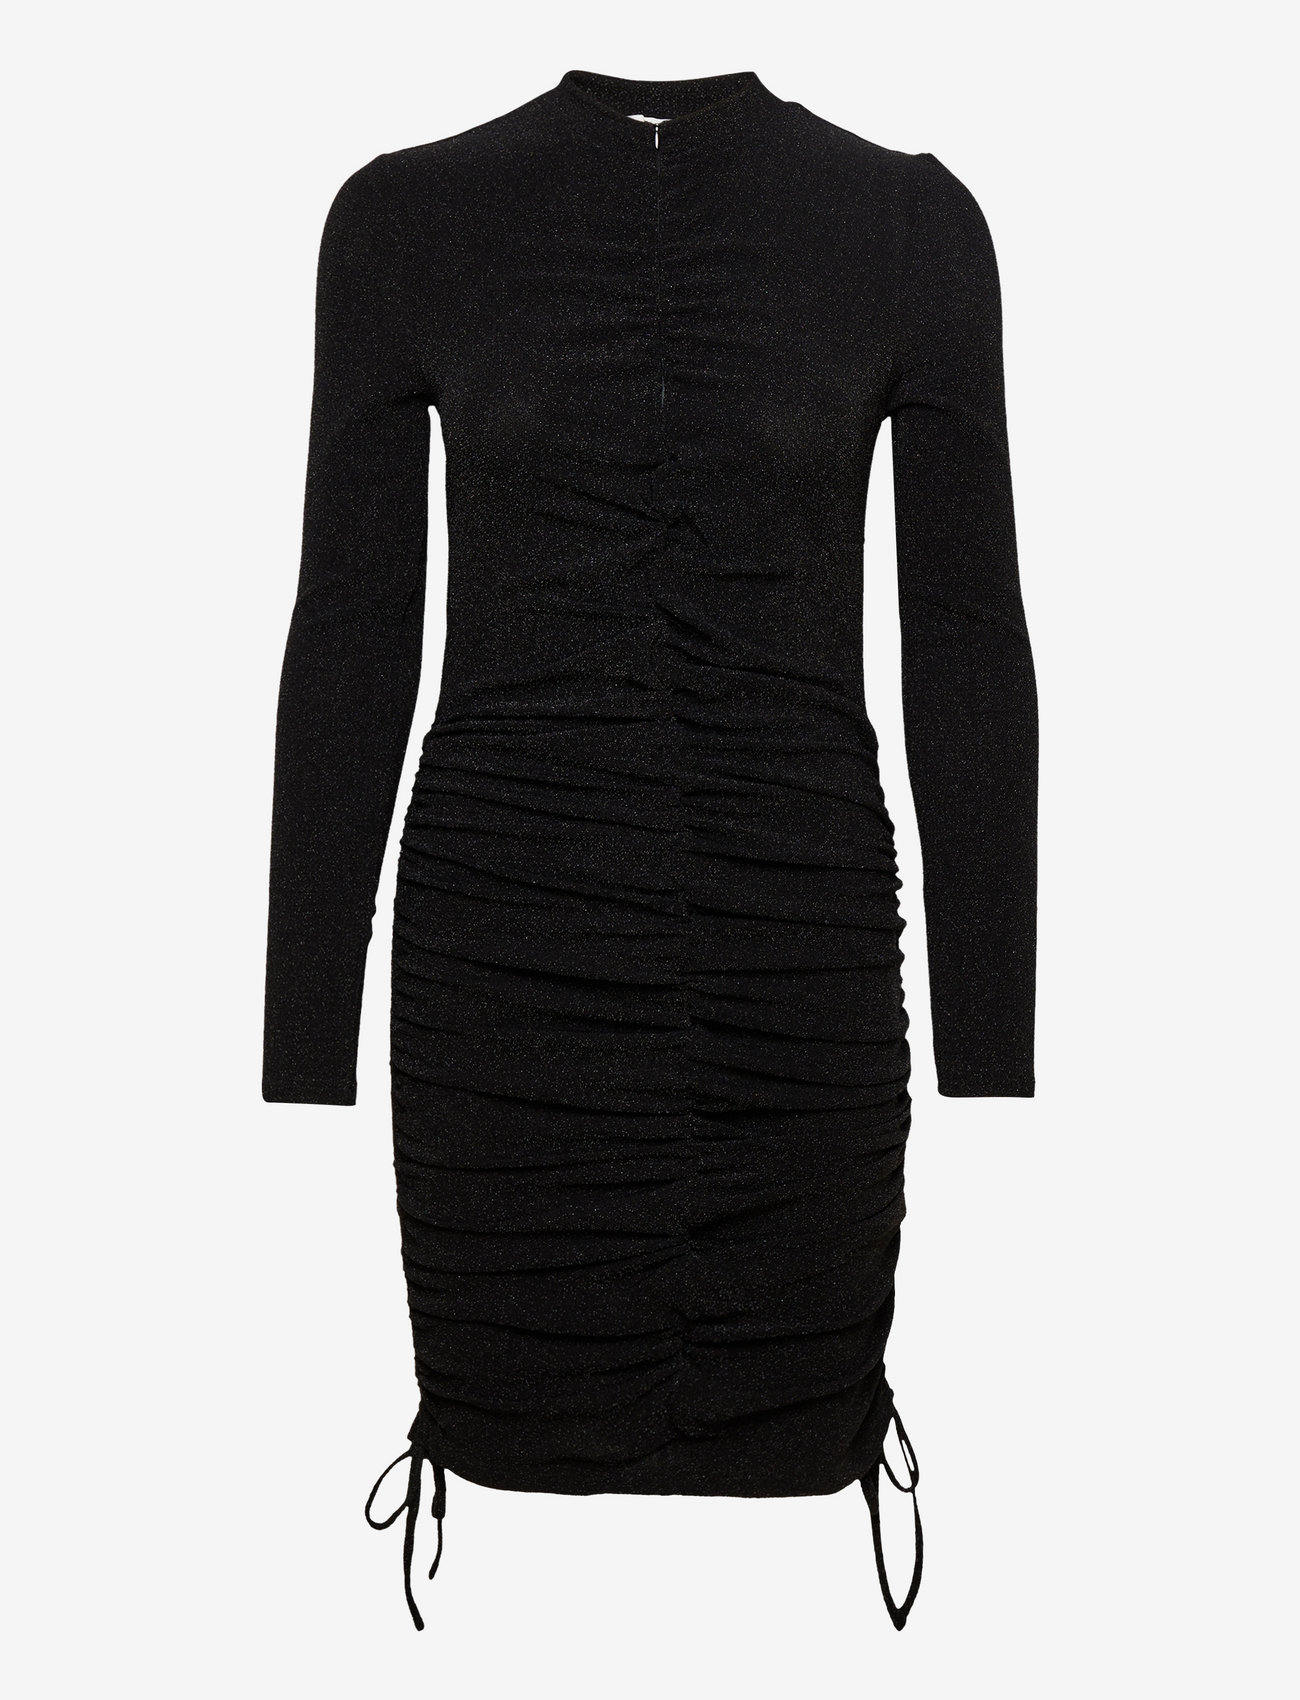 bzr - Luella Visale dress - black - 0